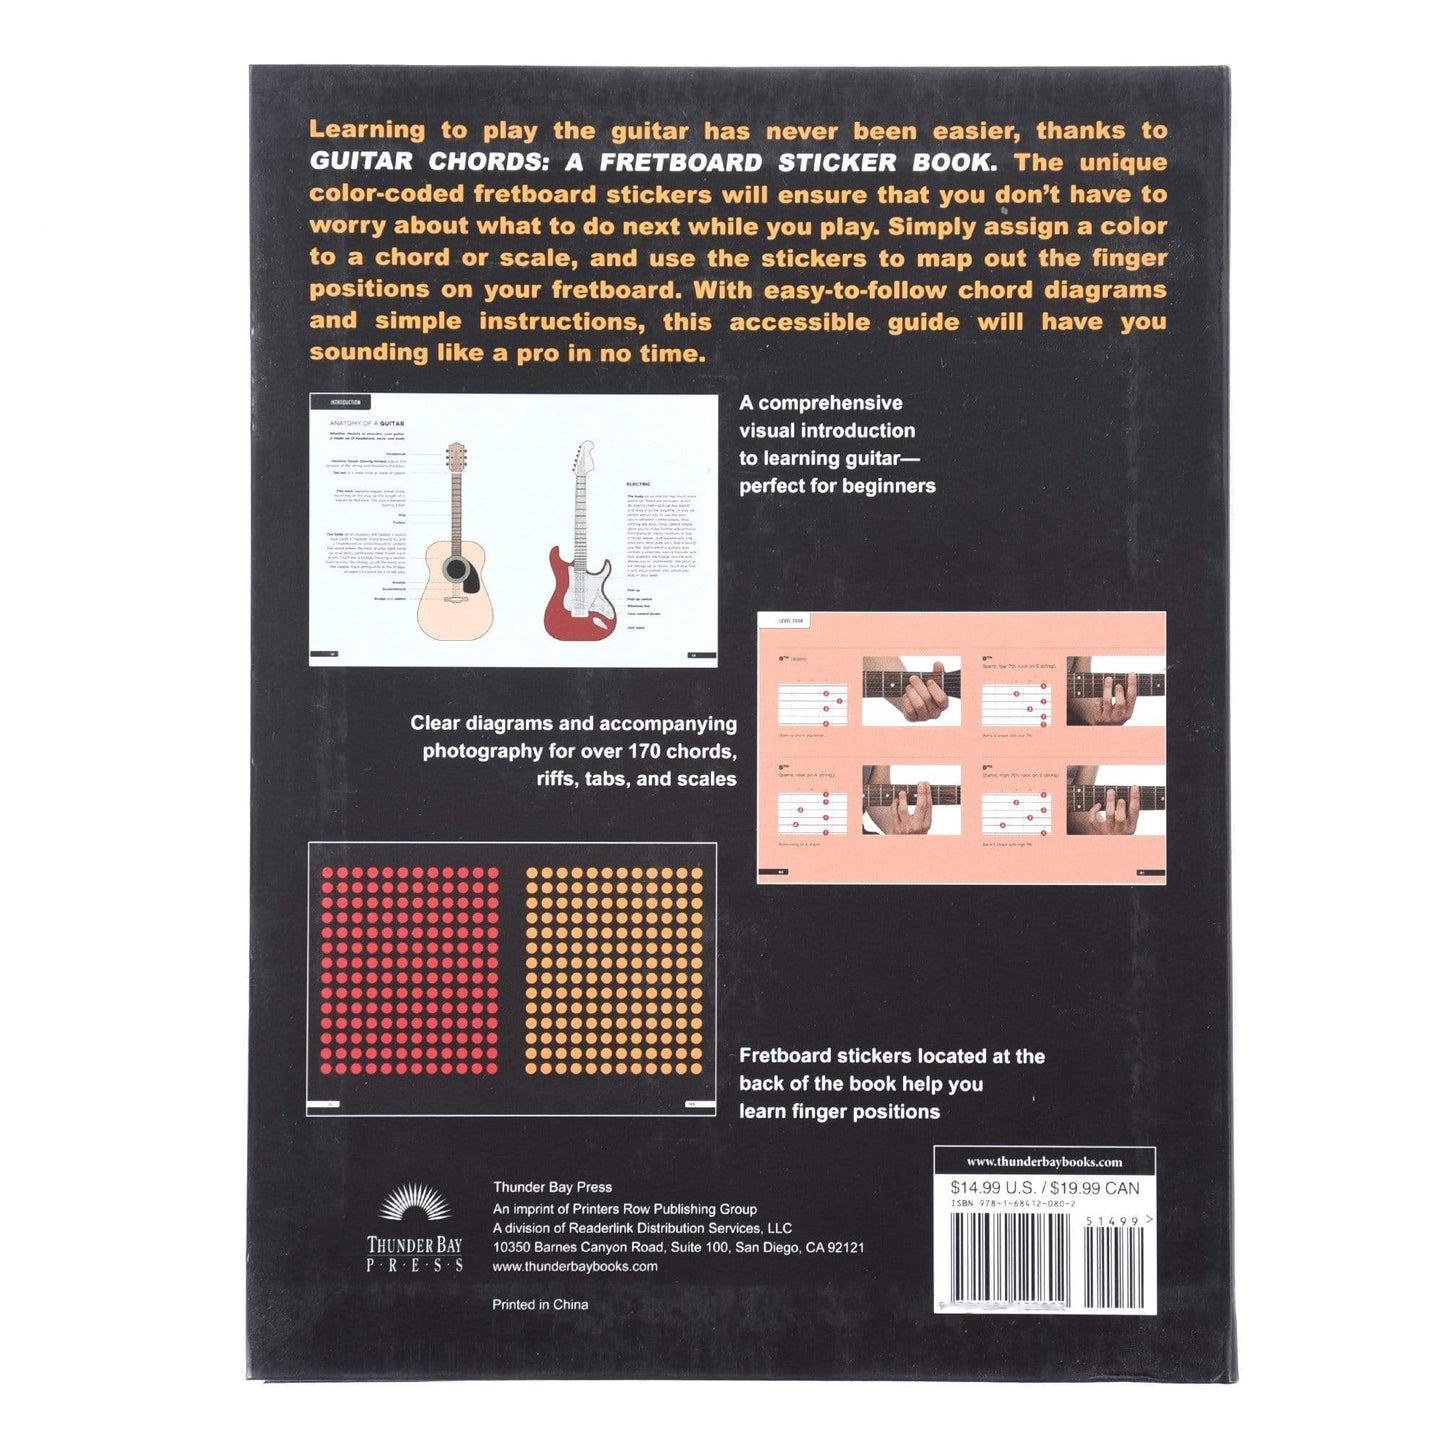 Guitar Chords: A Fretboard Sticker Book Accessories / Books and DVDs